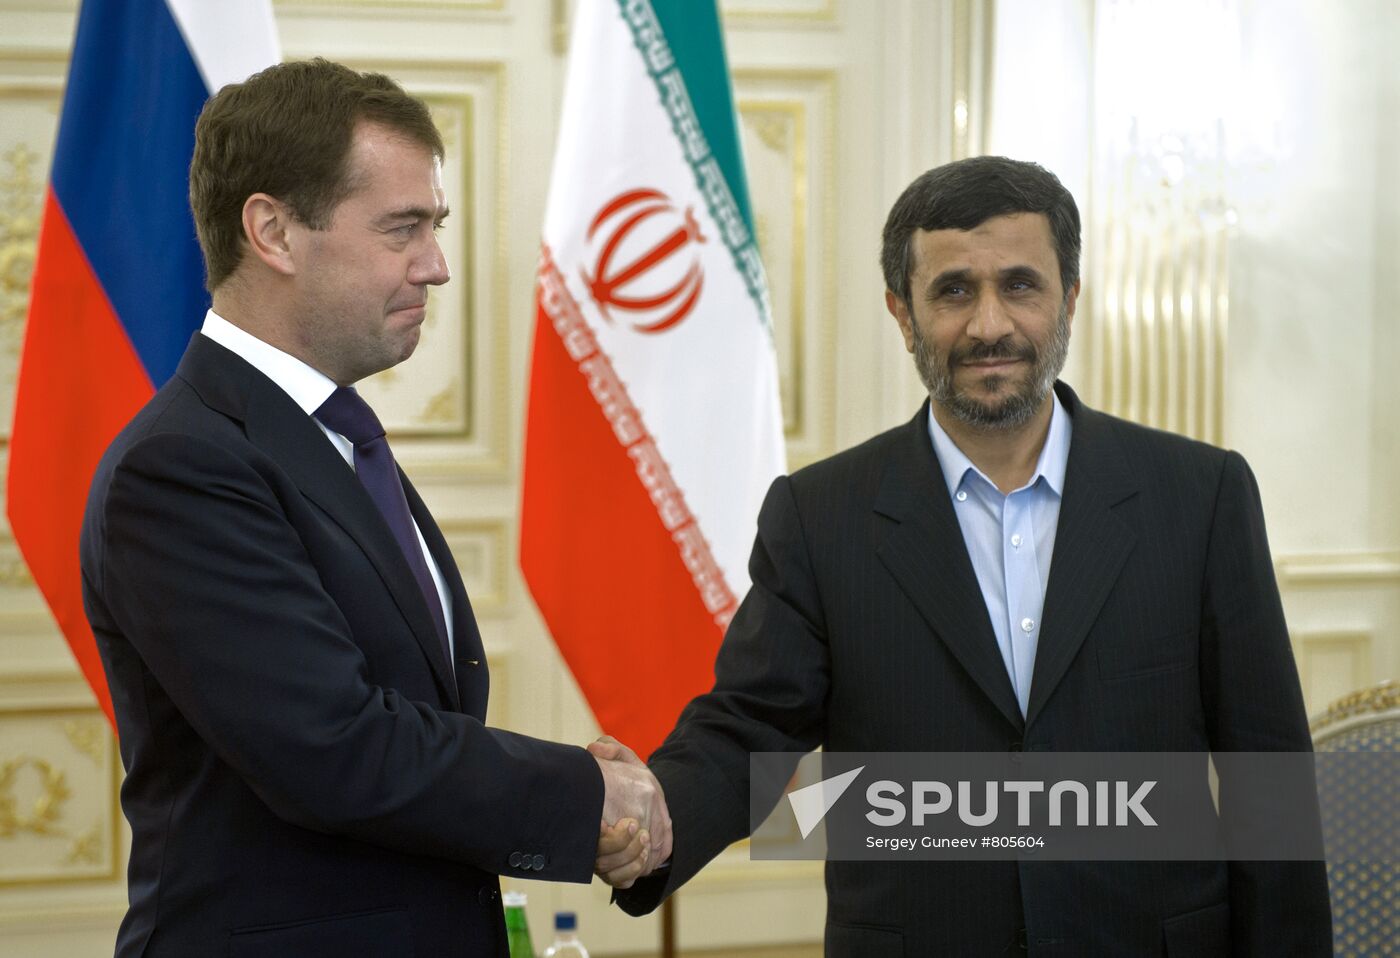 Dmitry Medvedev attends Caspian states' summit in Baku